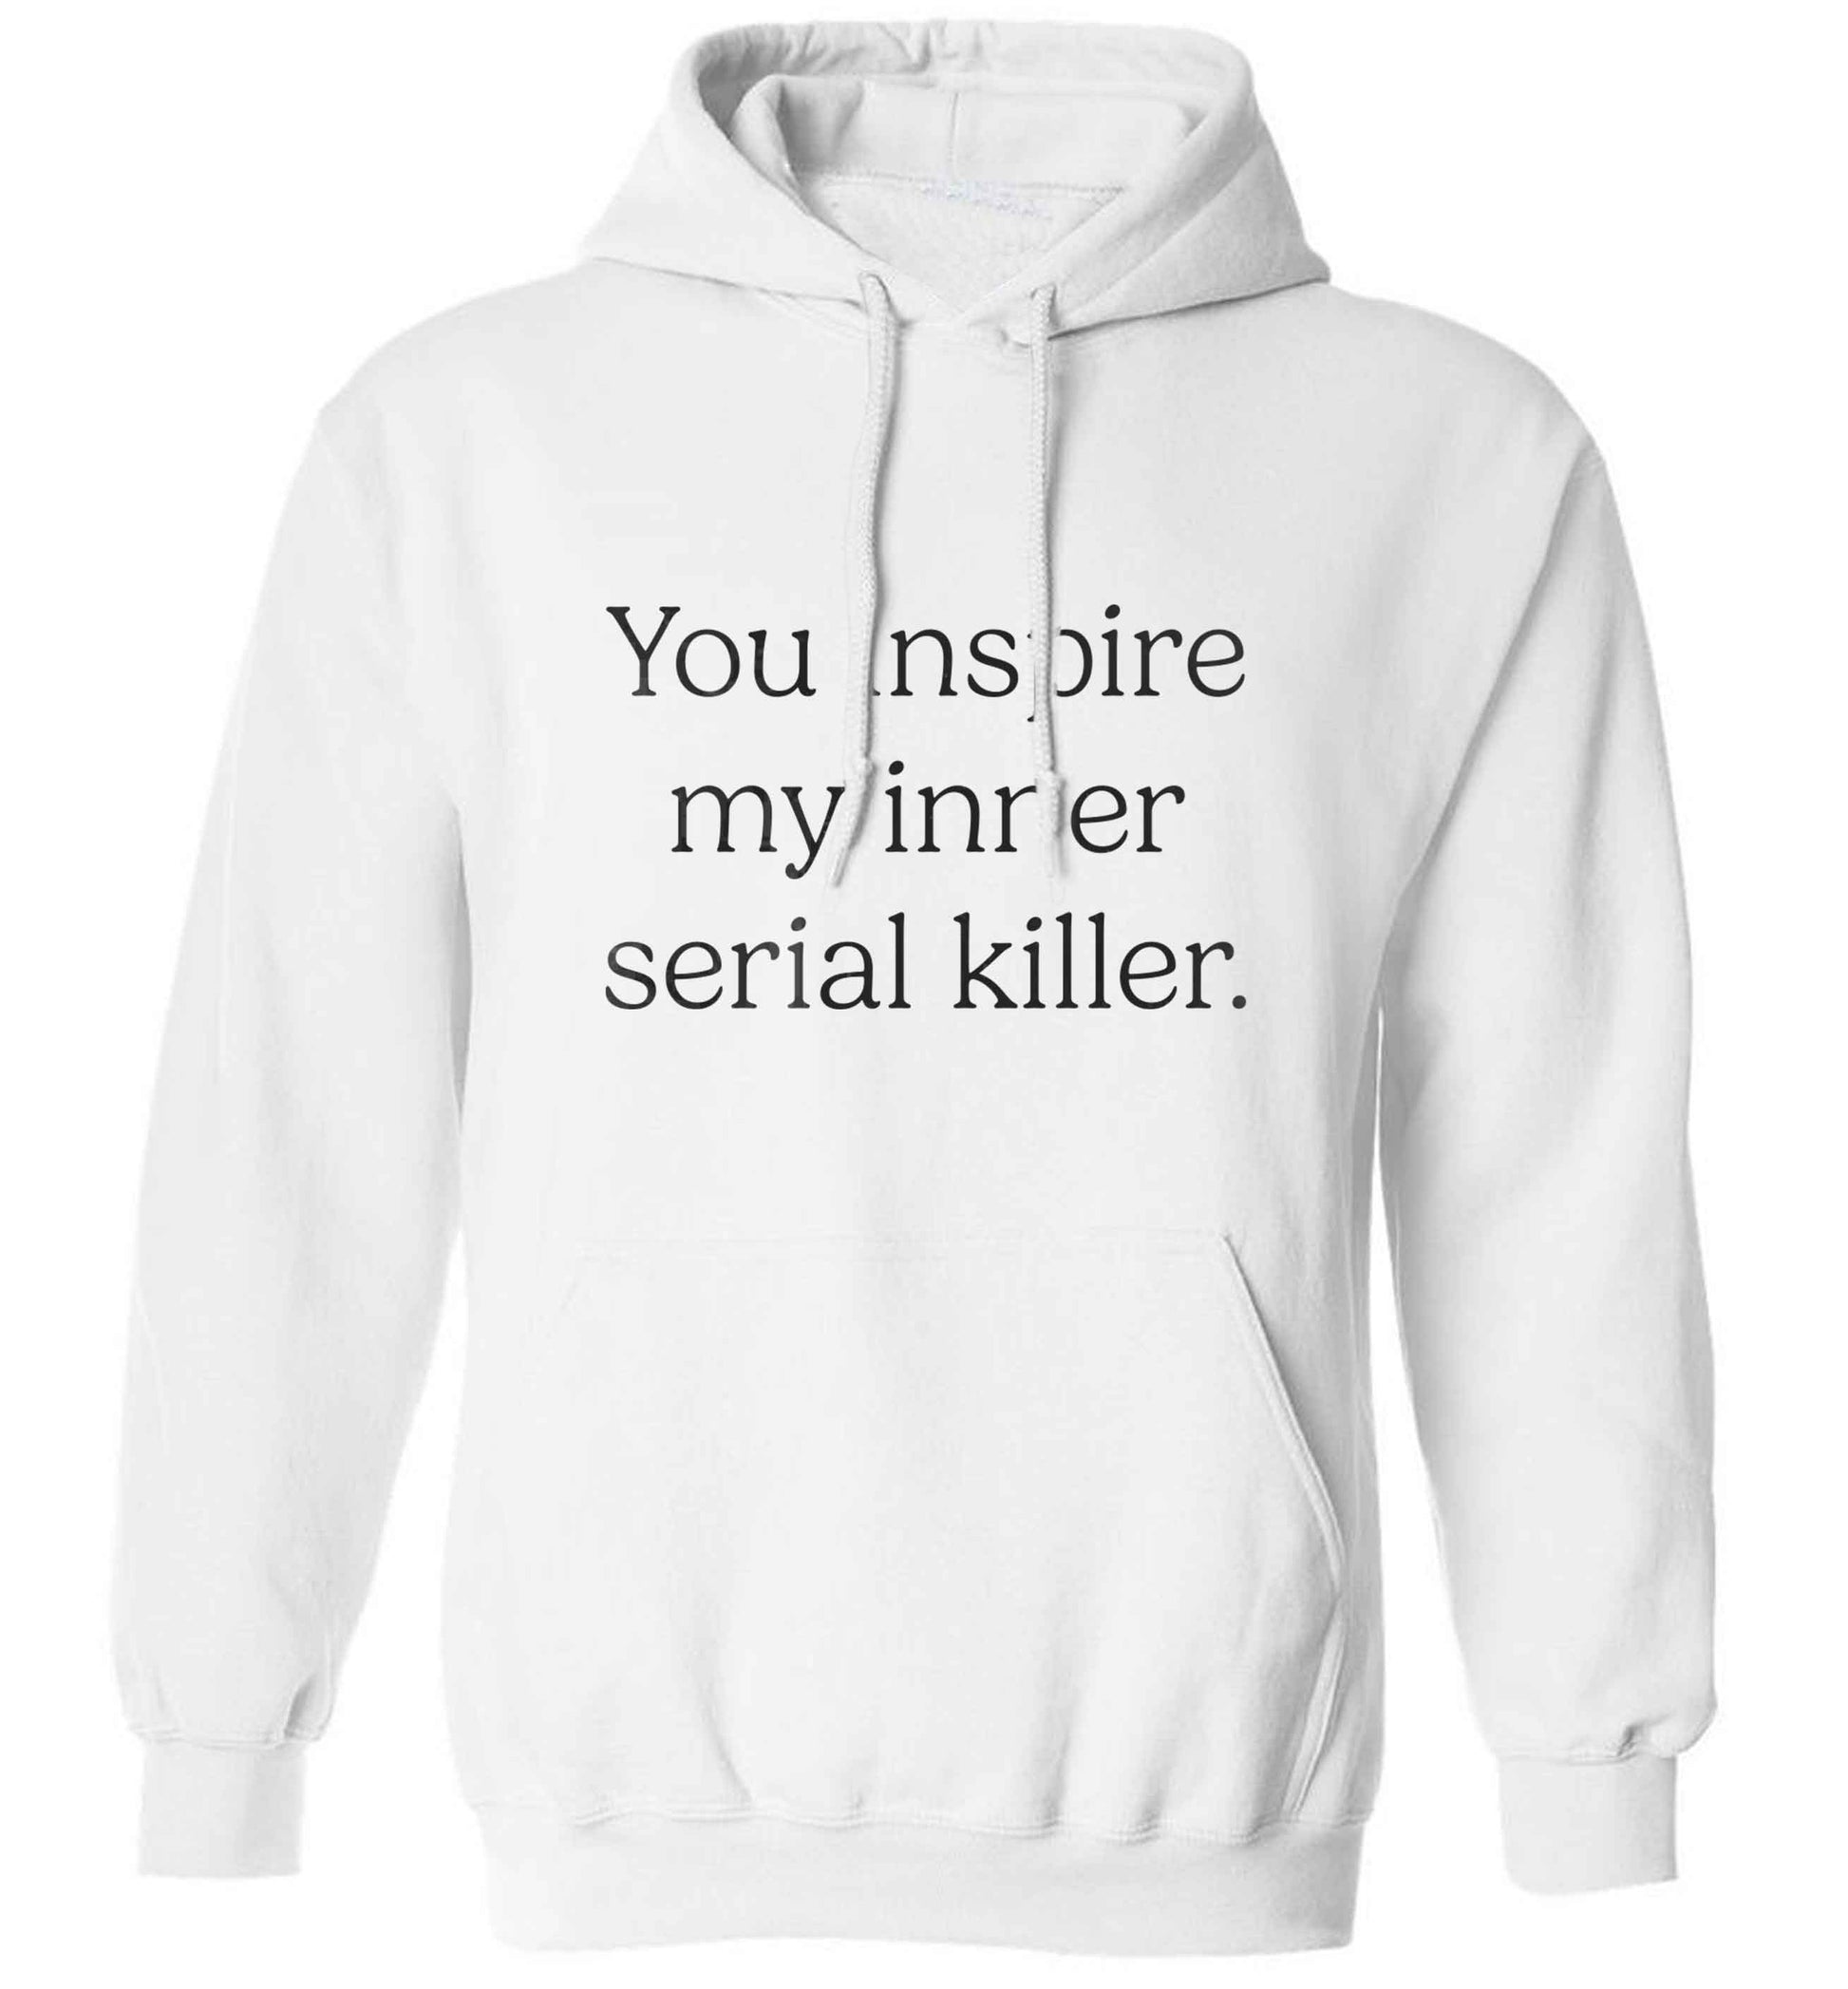 You inspire my inner serial killer Kit adults unisex white hoodie 2XL